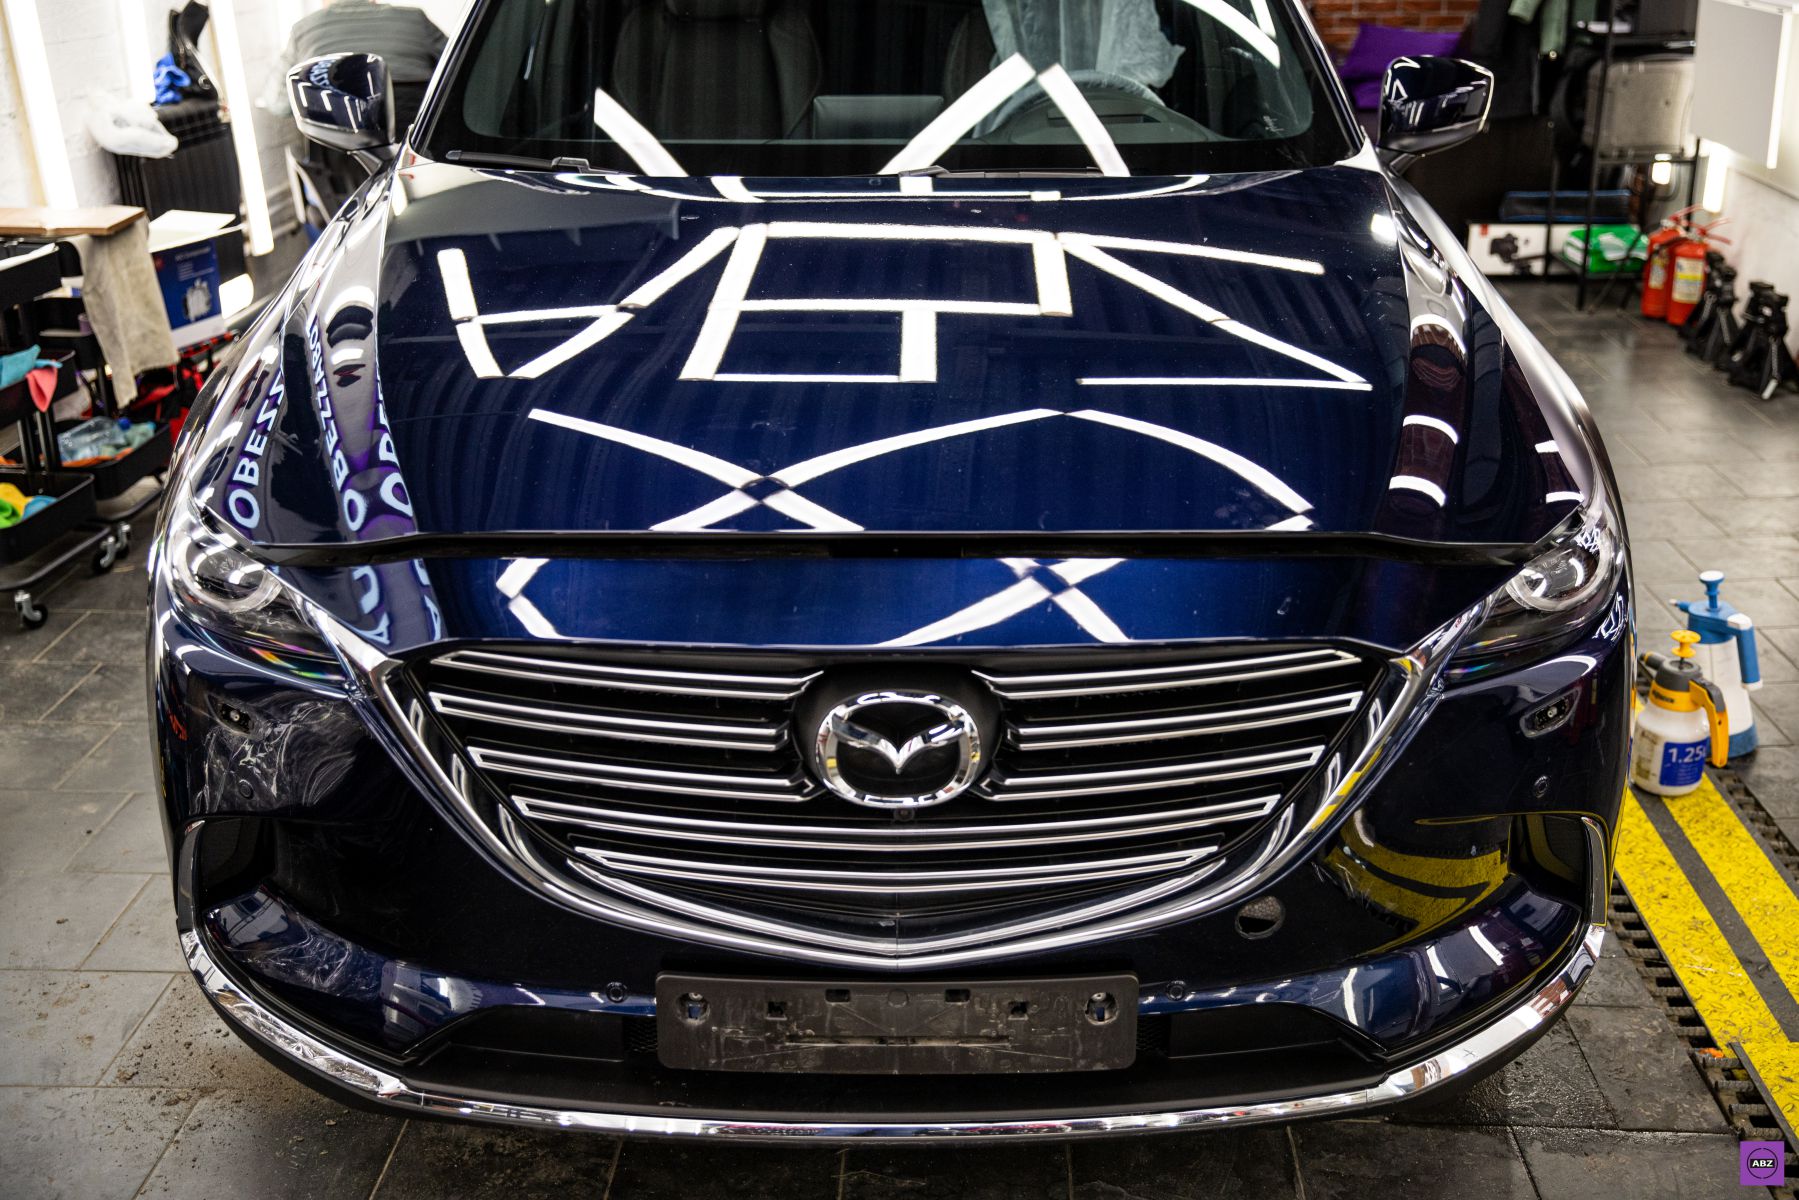 Фото Mazda CX-9 под защитой матового полиуретана